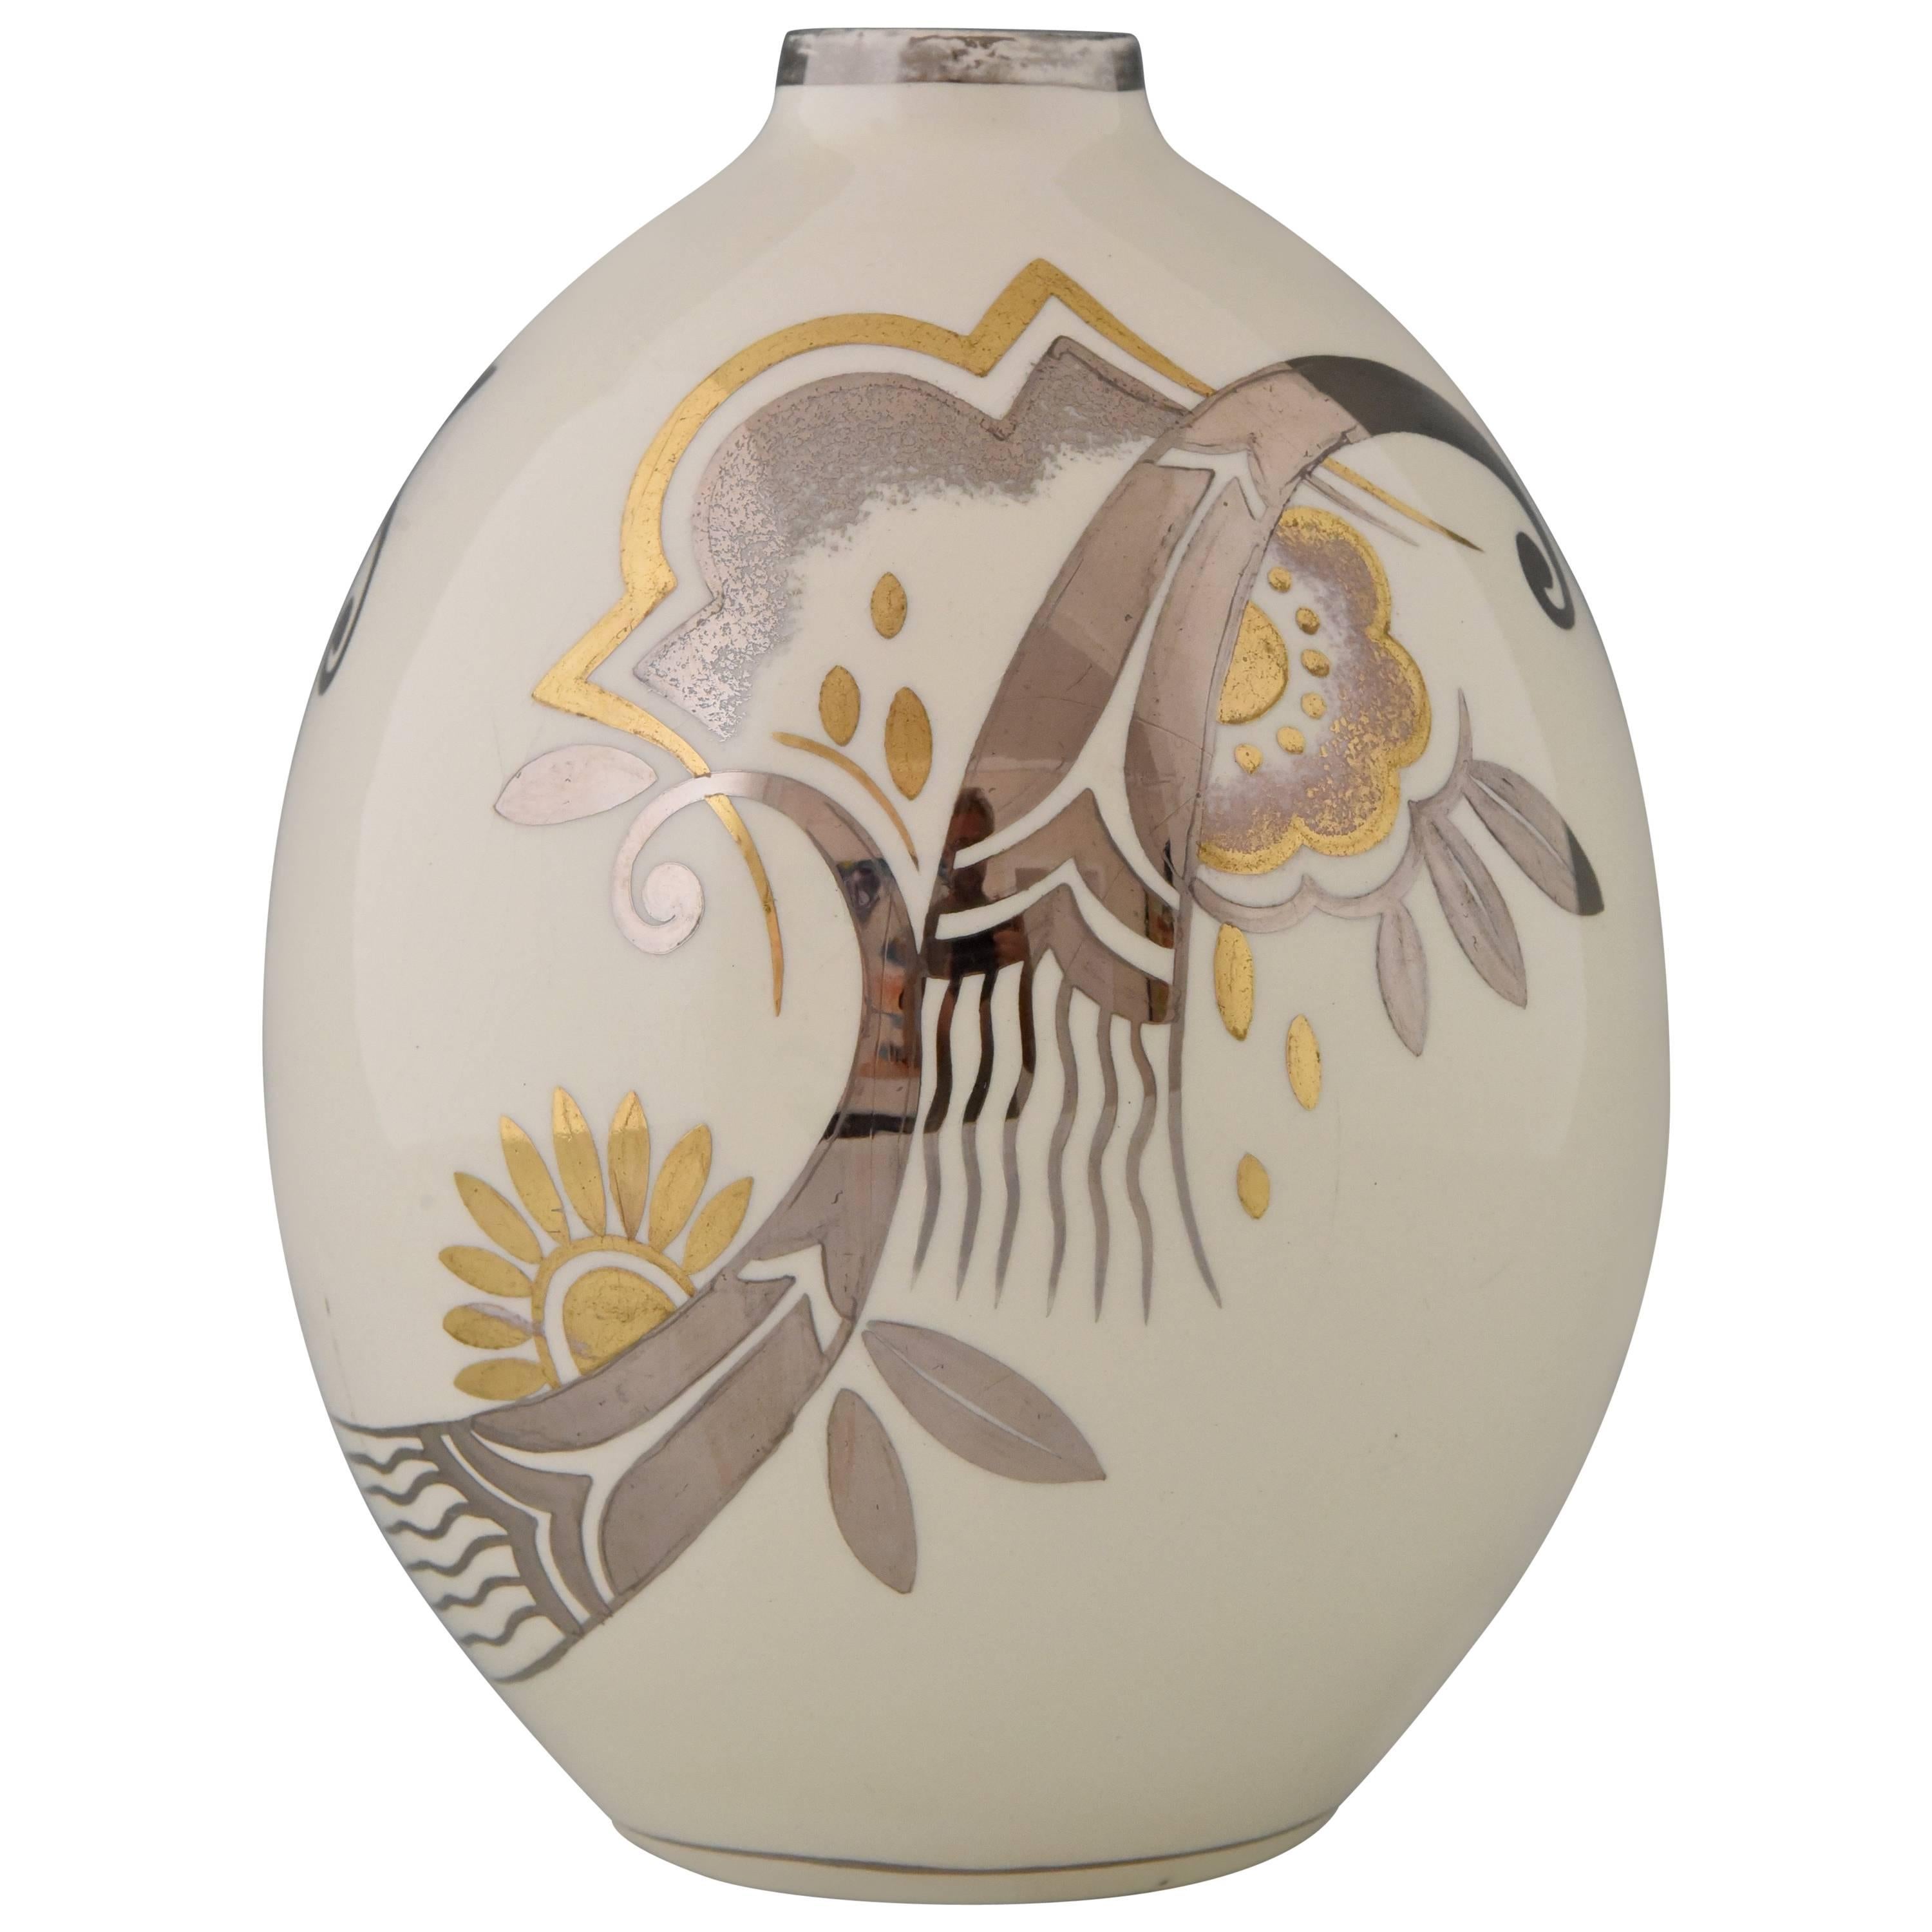 Art Deco Ceramic Vase with Flowers by Boch Freres, Belgium, 1931